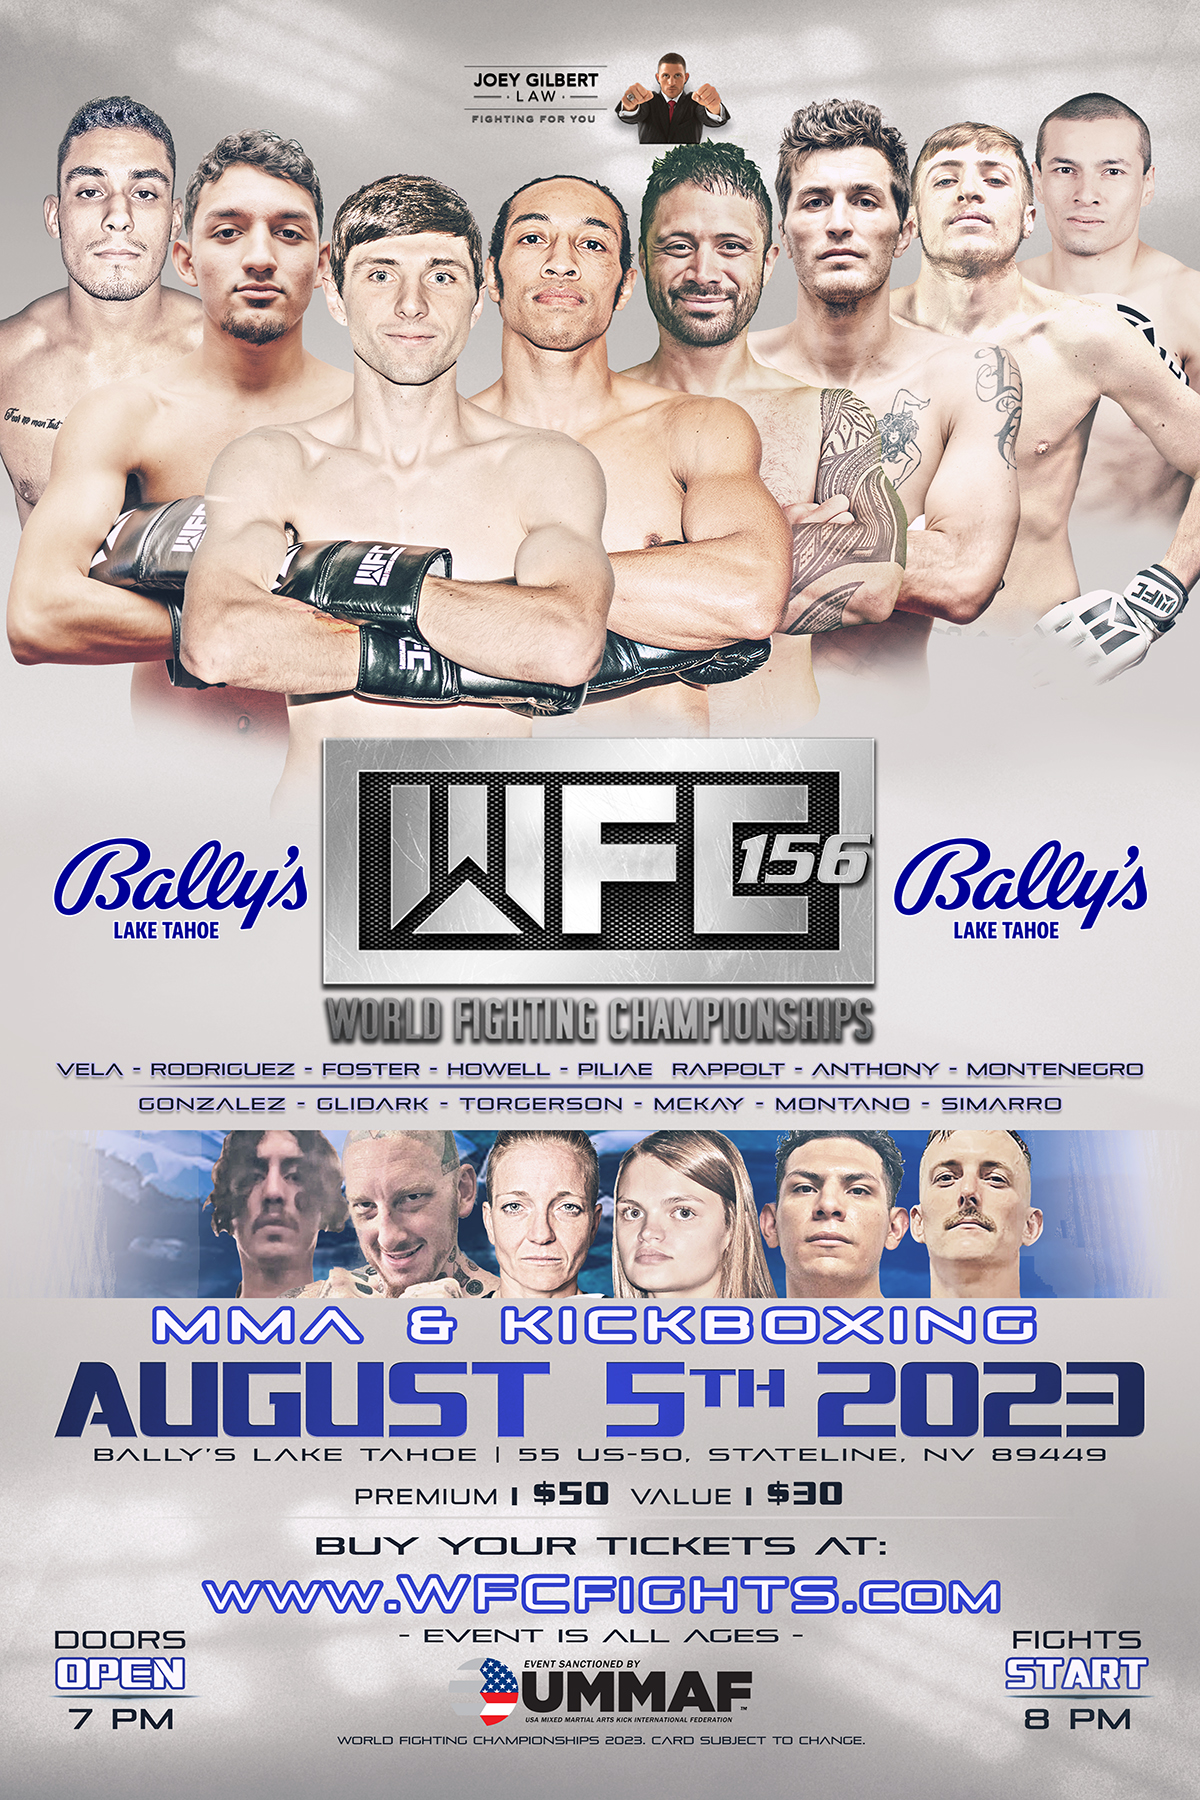 WFC 156 LIVE MMA and Kickboxing 8/5/23 at Ballys Lake Tahoe